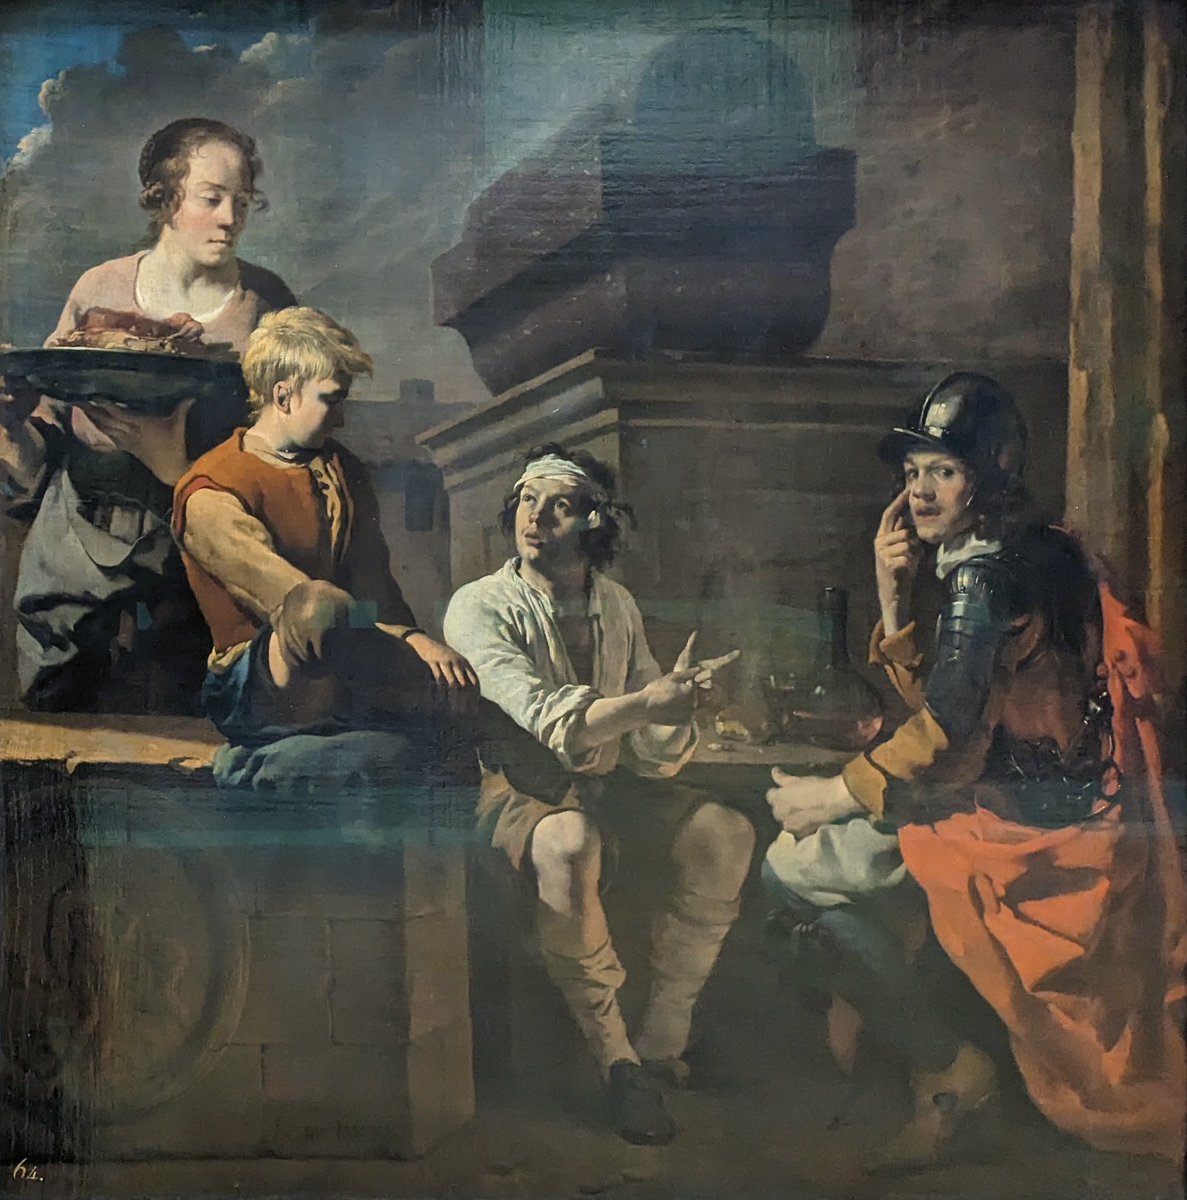 Karel Dujardin’s “The Morra Players” (1660s) @MuseeLouvre #art #twitart